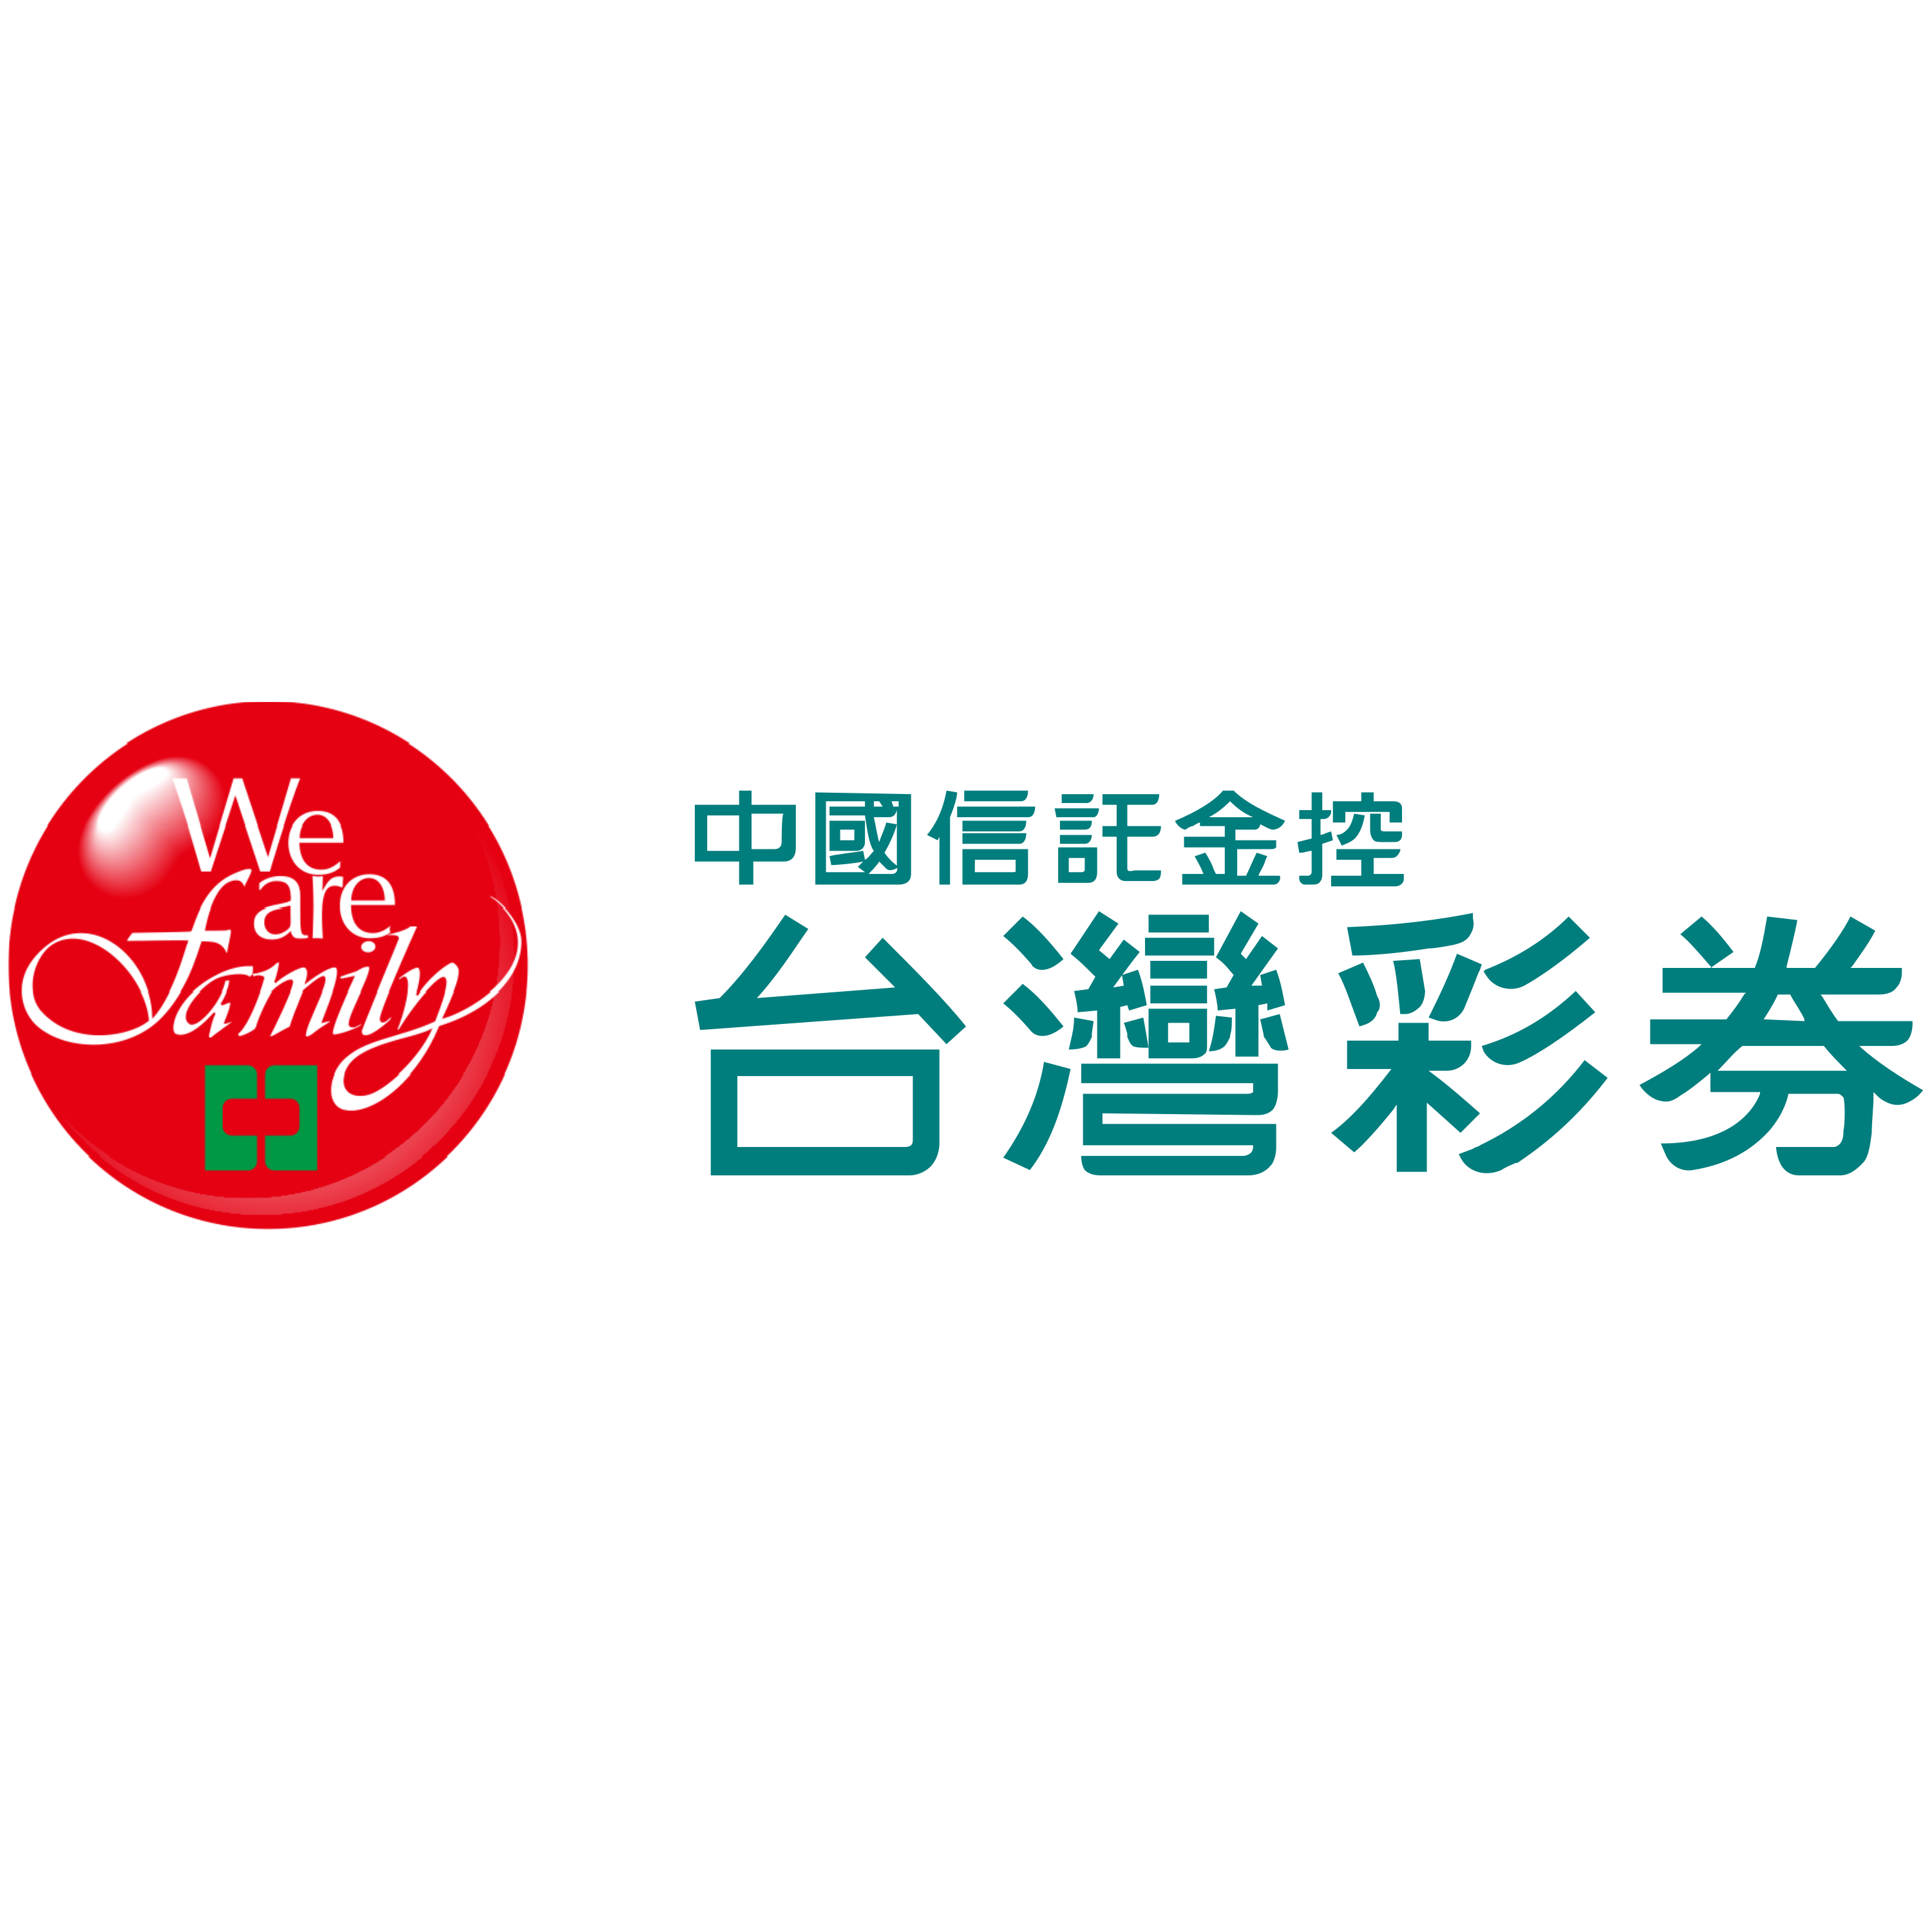 Taiwan Lottery Logo  Transparent Image